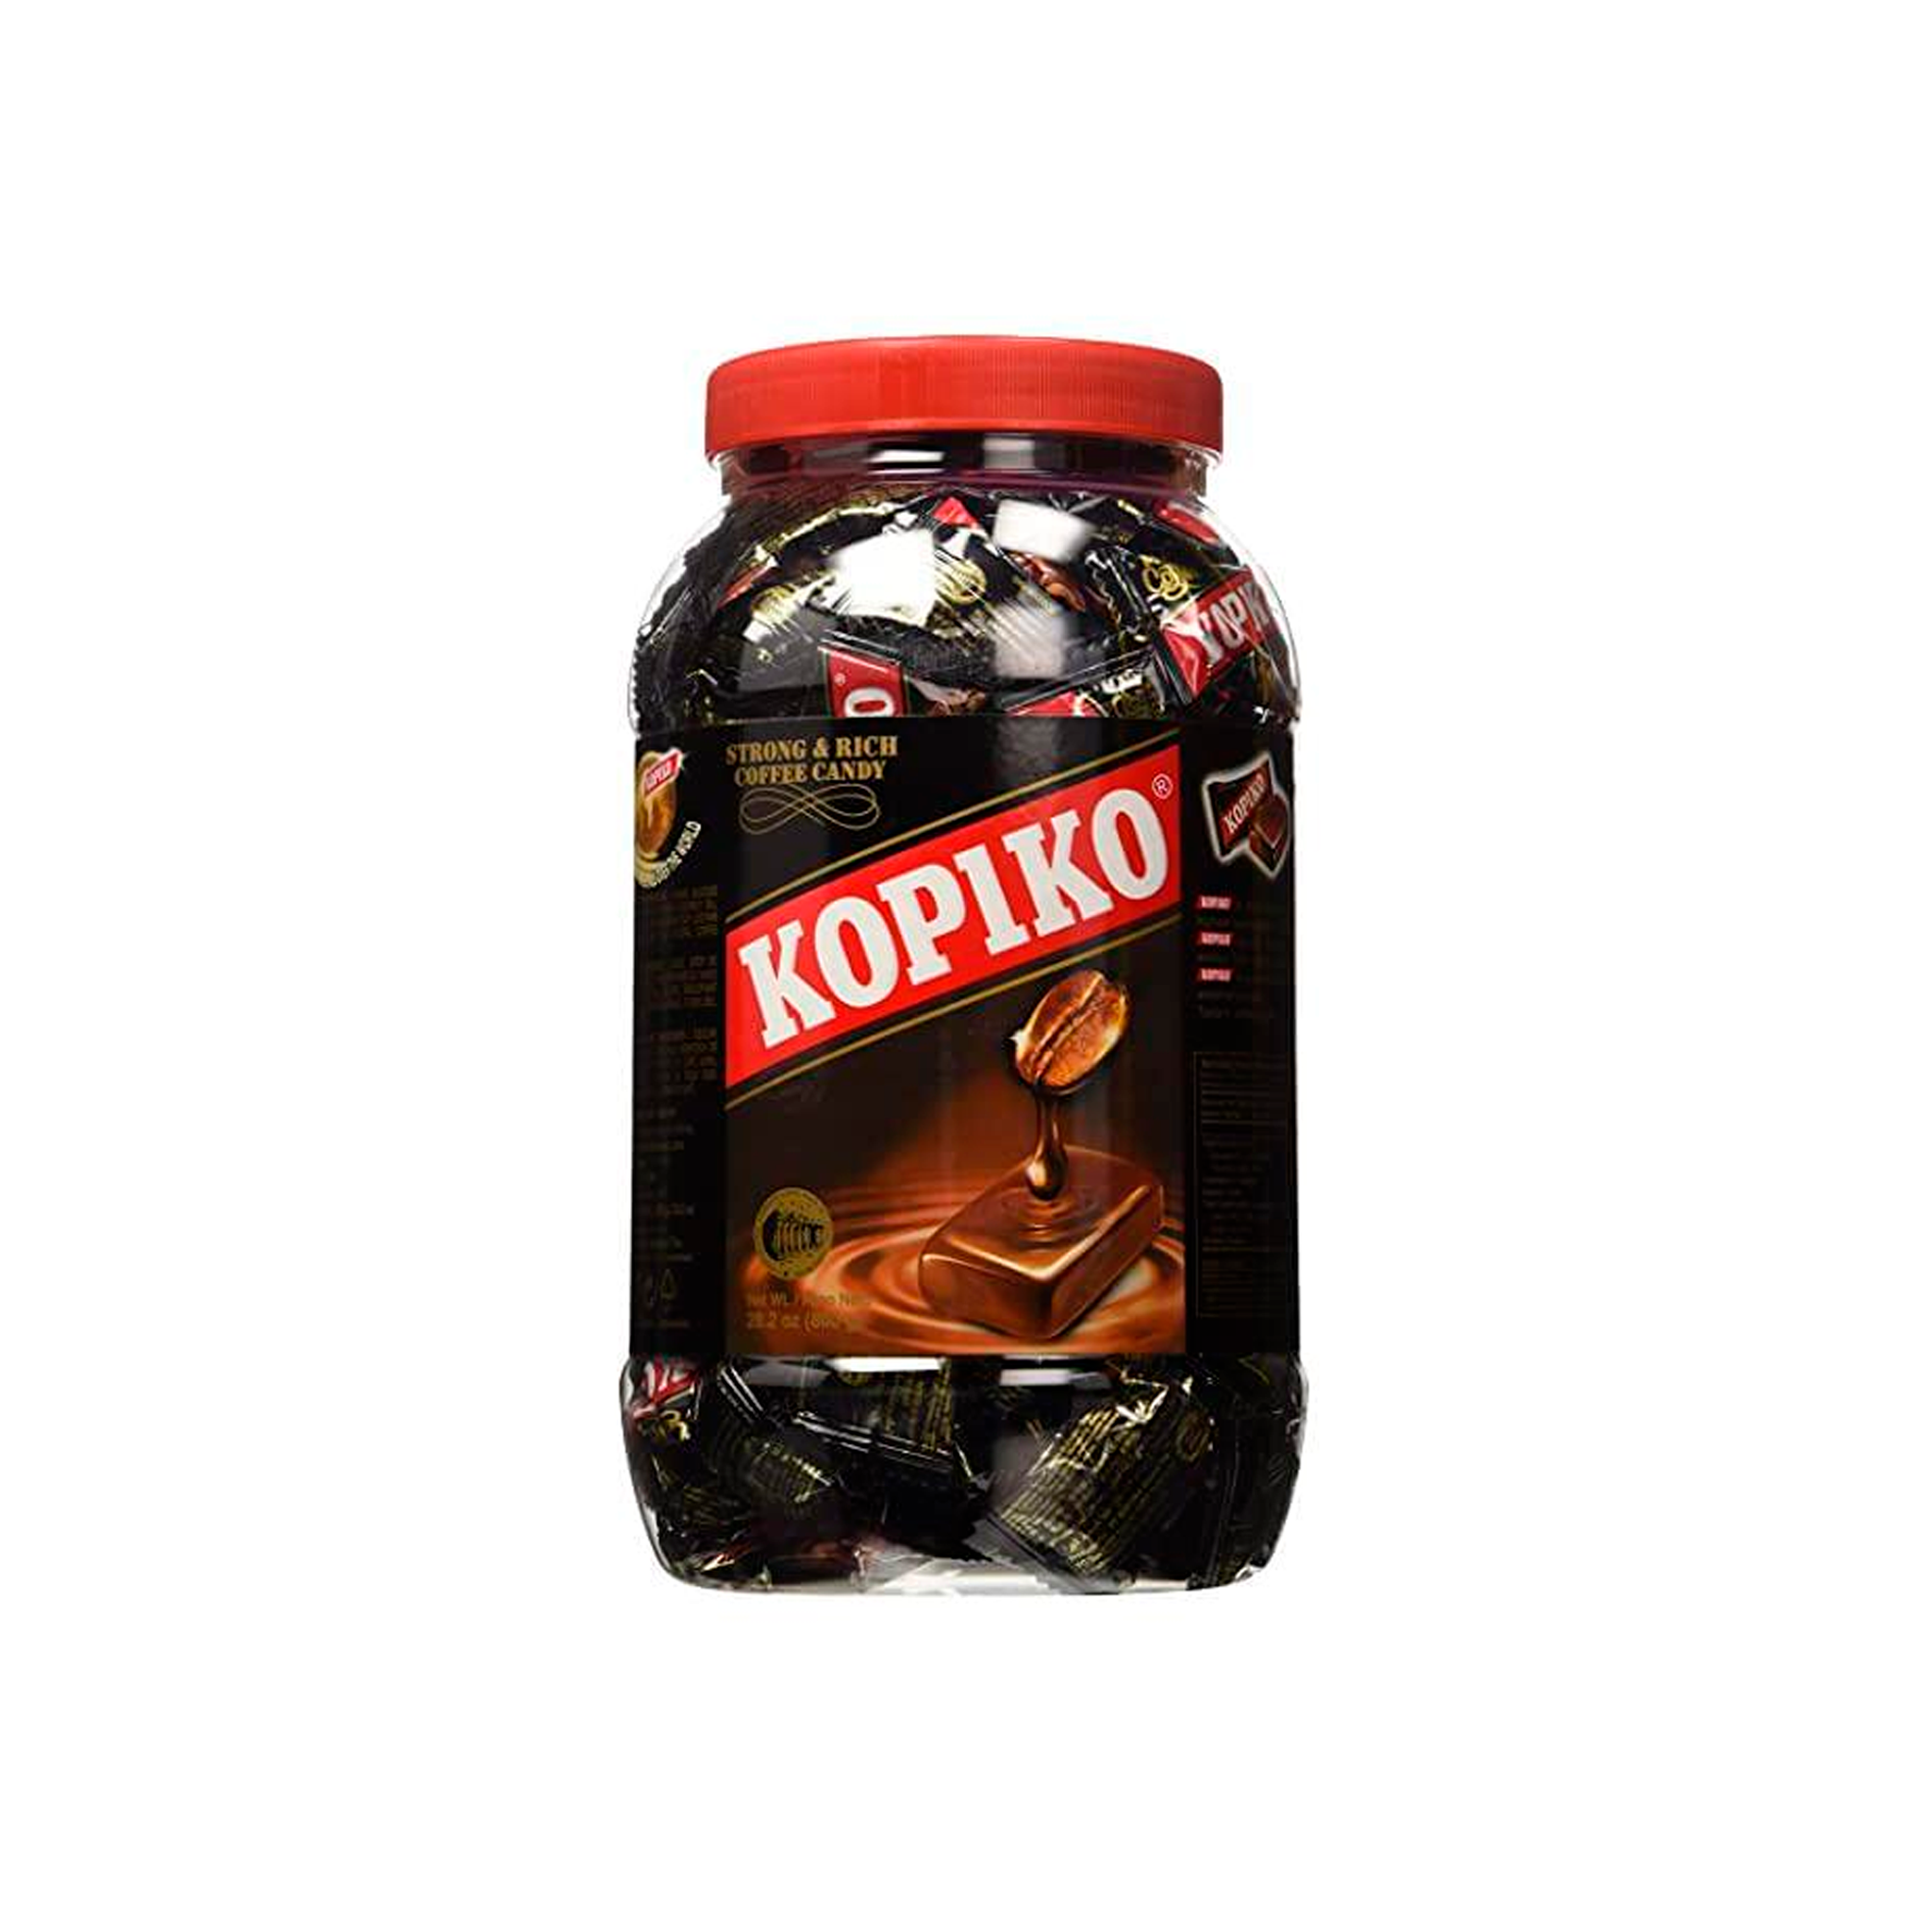 Kopiko Coffee Candy 600g